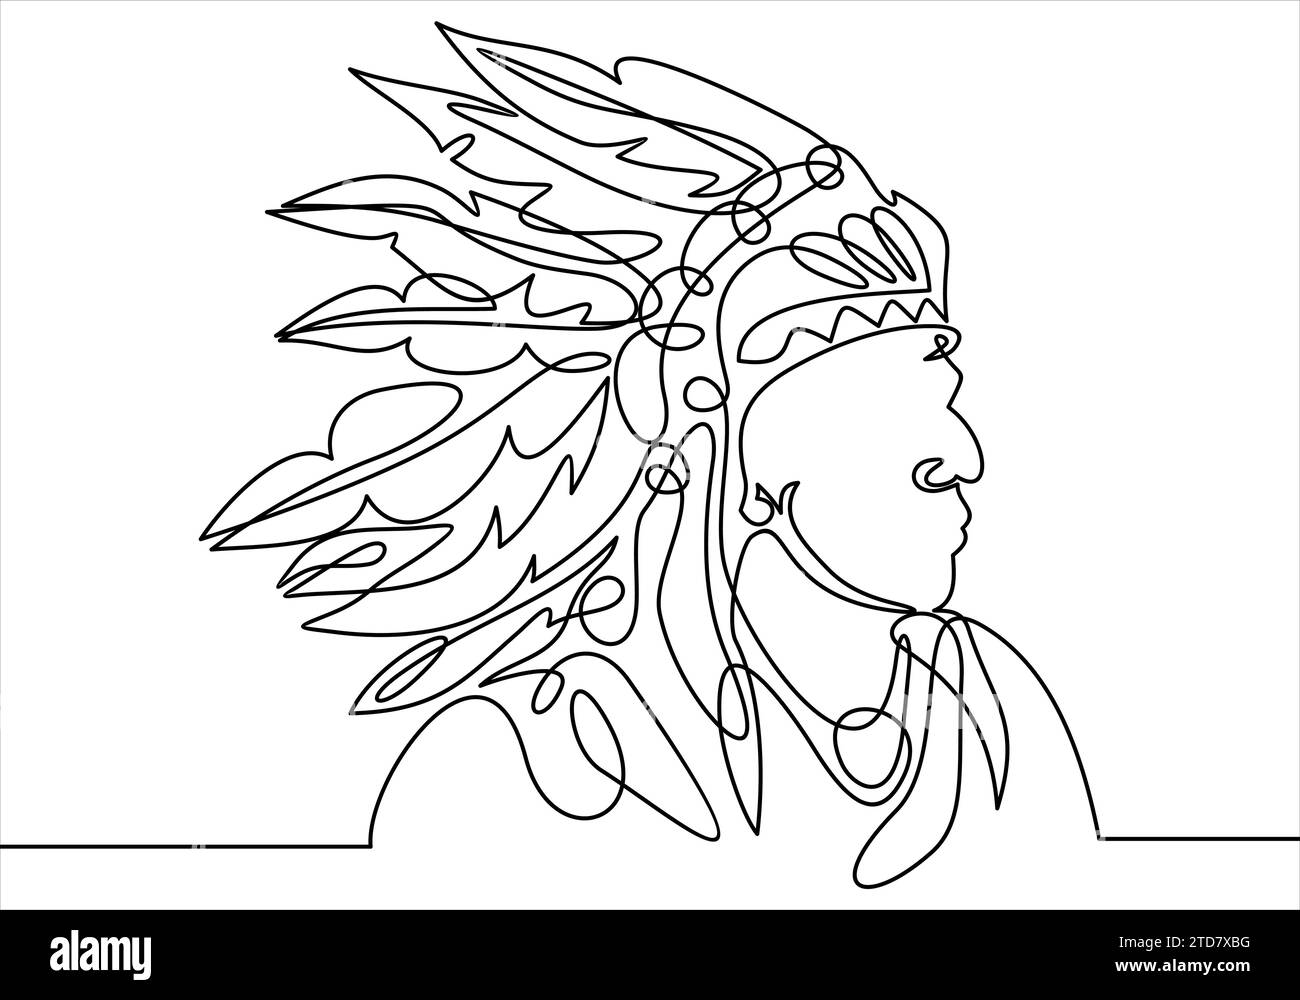 american indian-continuous line drawing Illustrazione Vettoriale